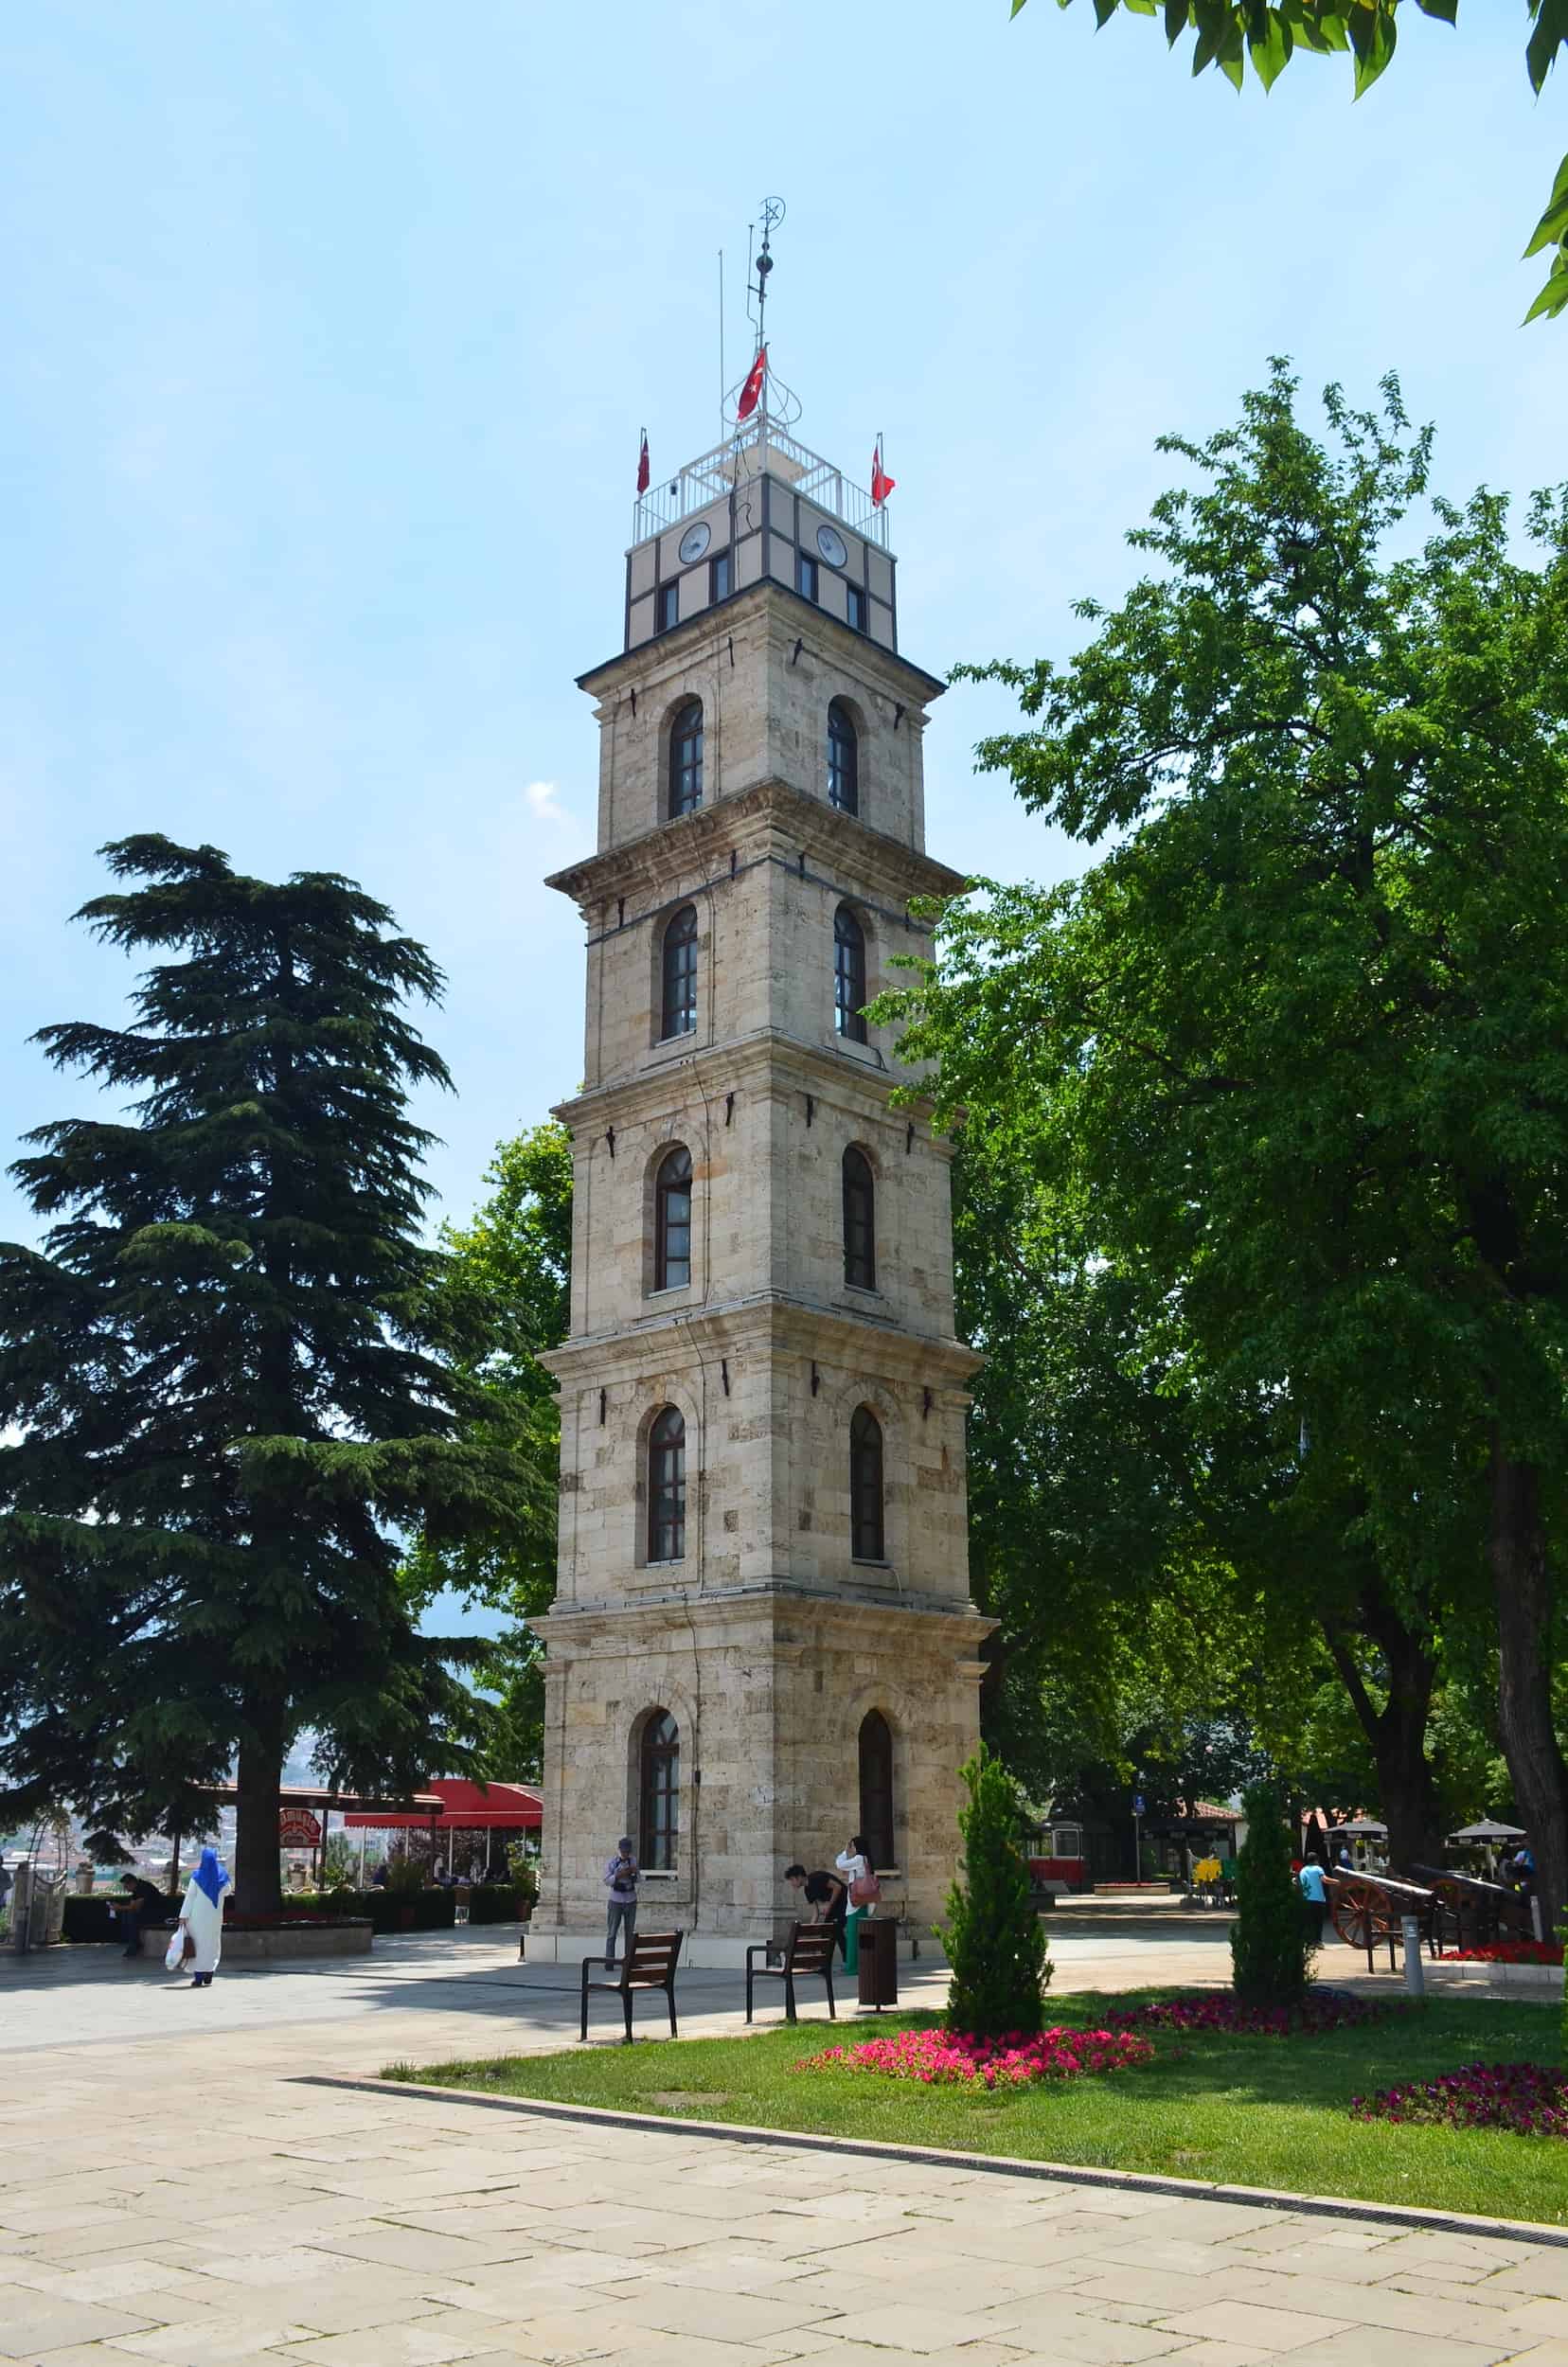 Tophane Clock Tower at Tophane Park, Bursa, Turkey